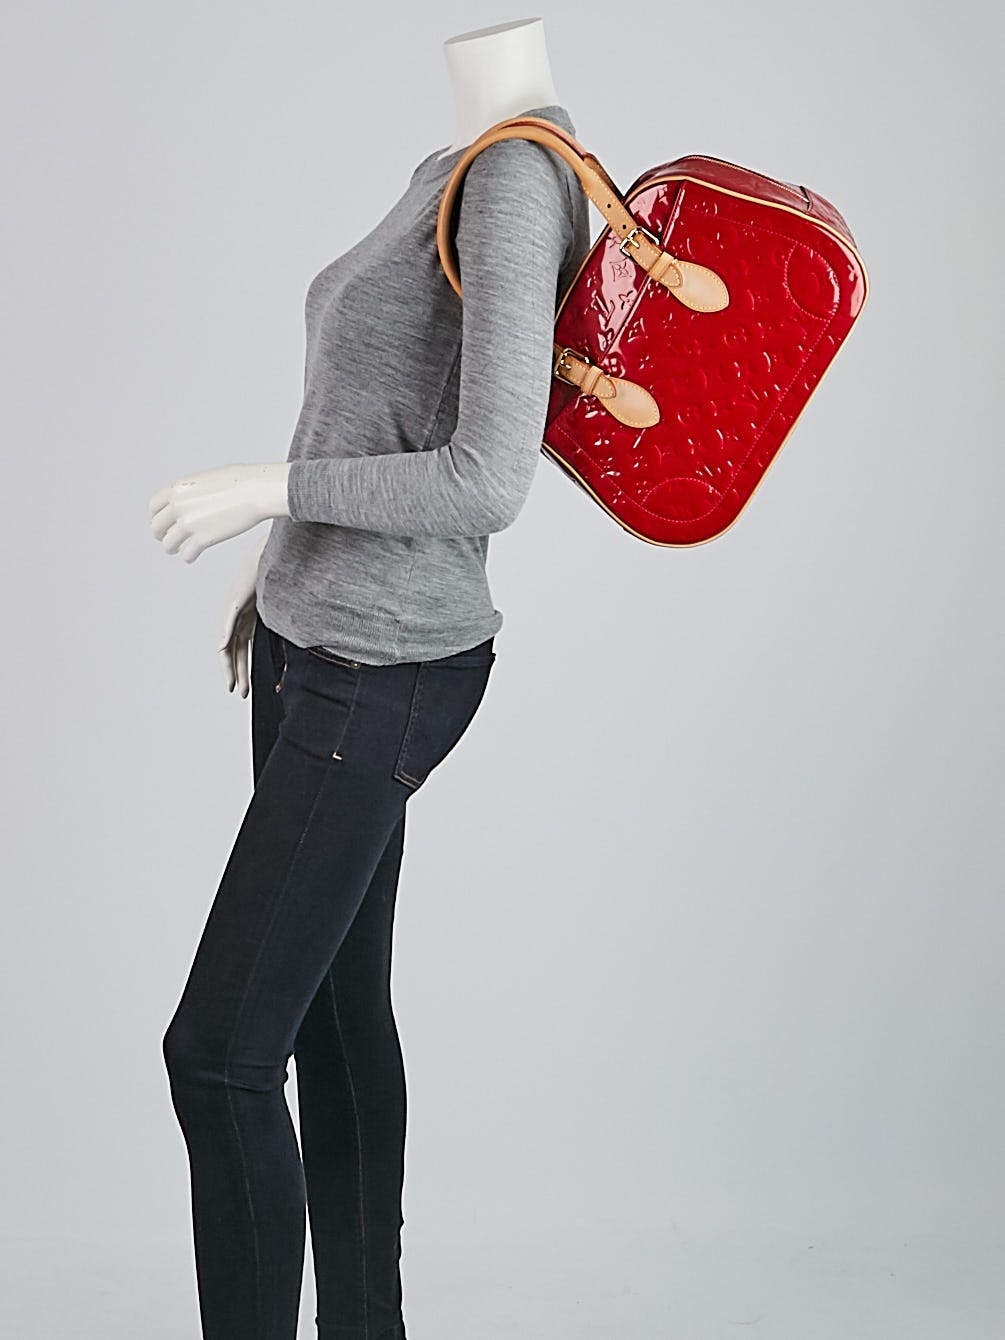 Louis Vuitton Red Monogram Vernis Summit Drive Bag